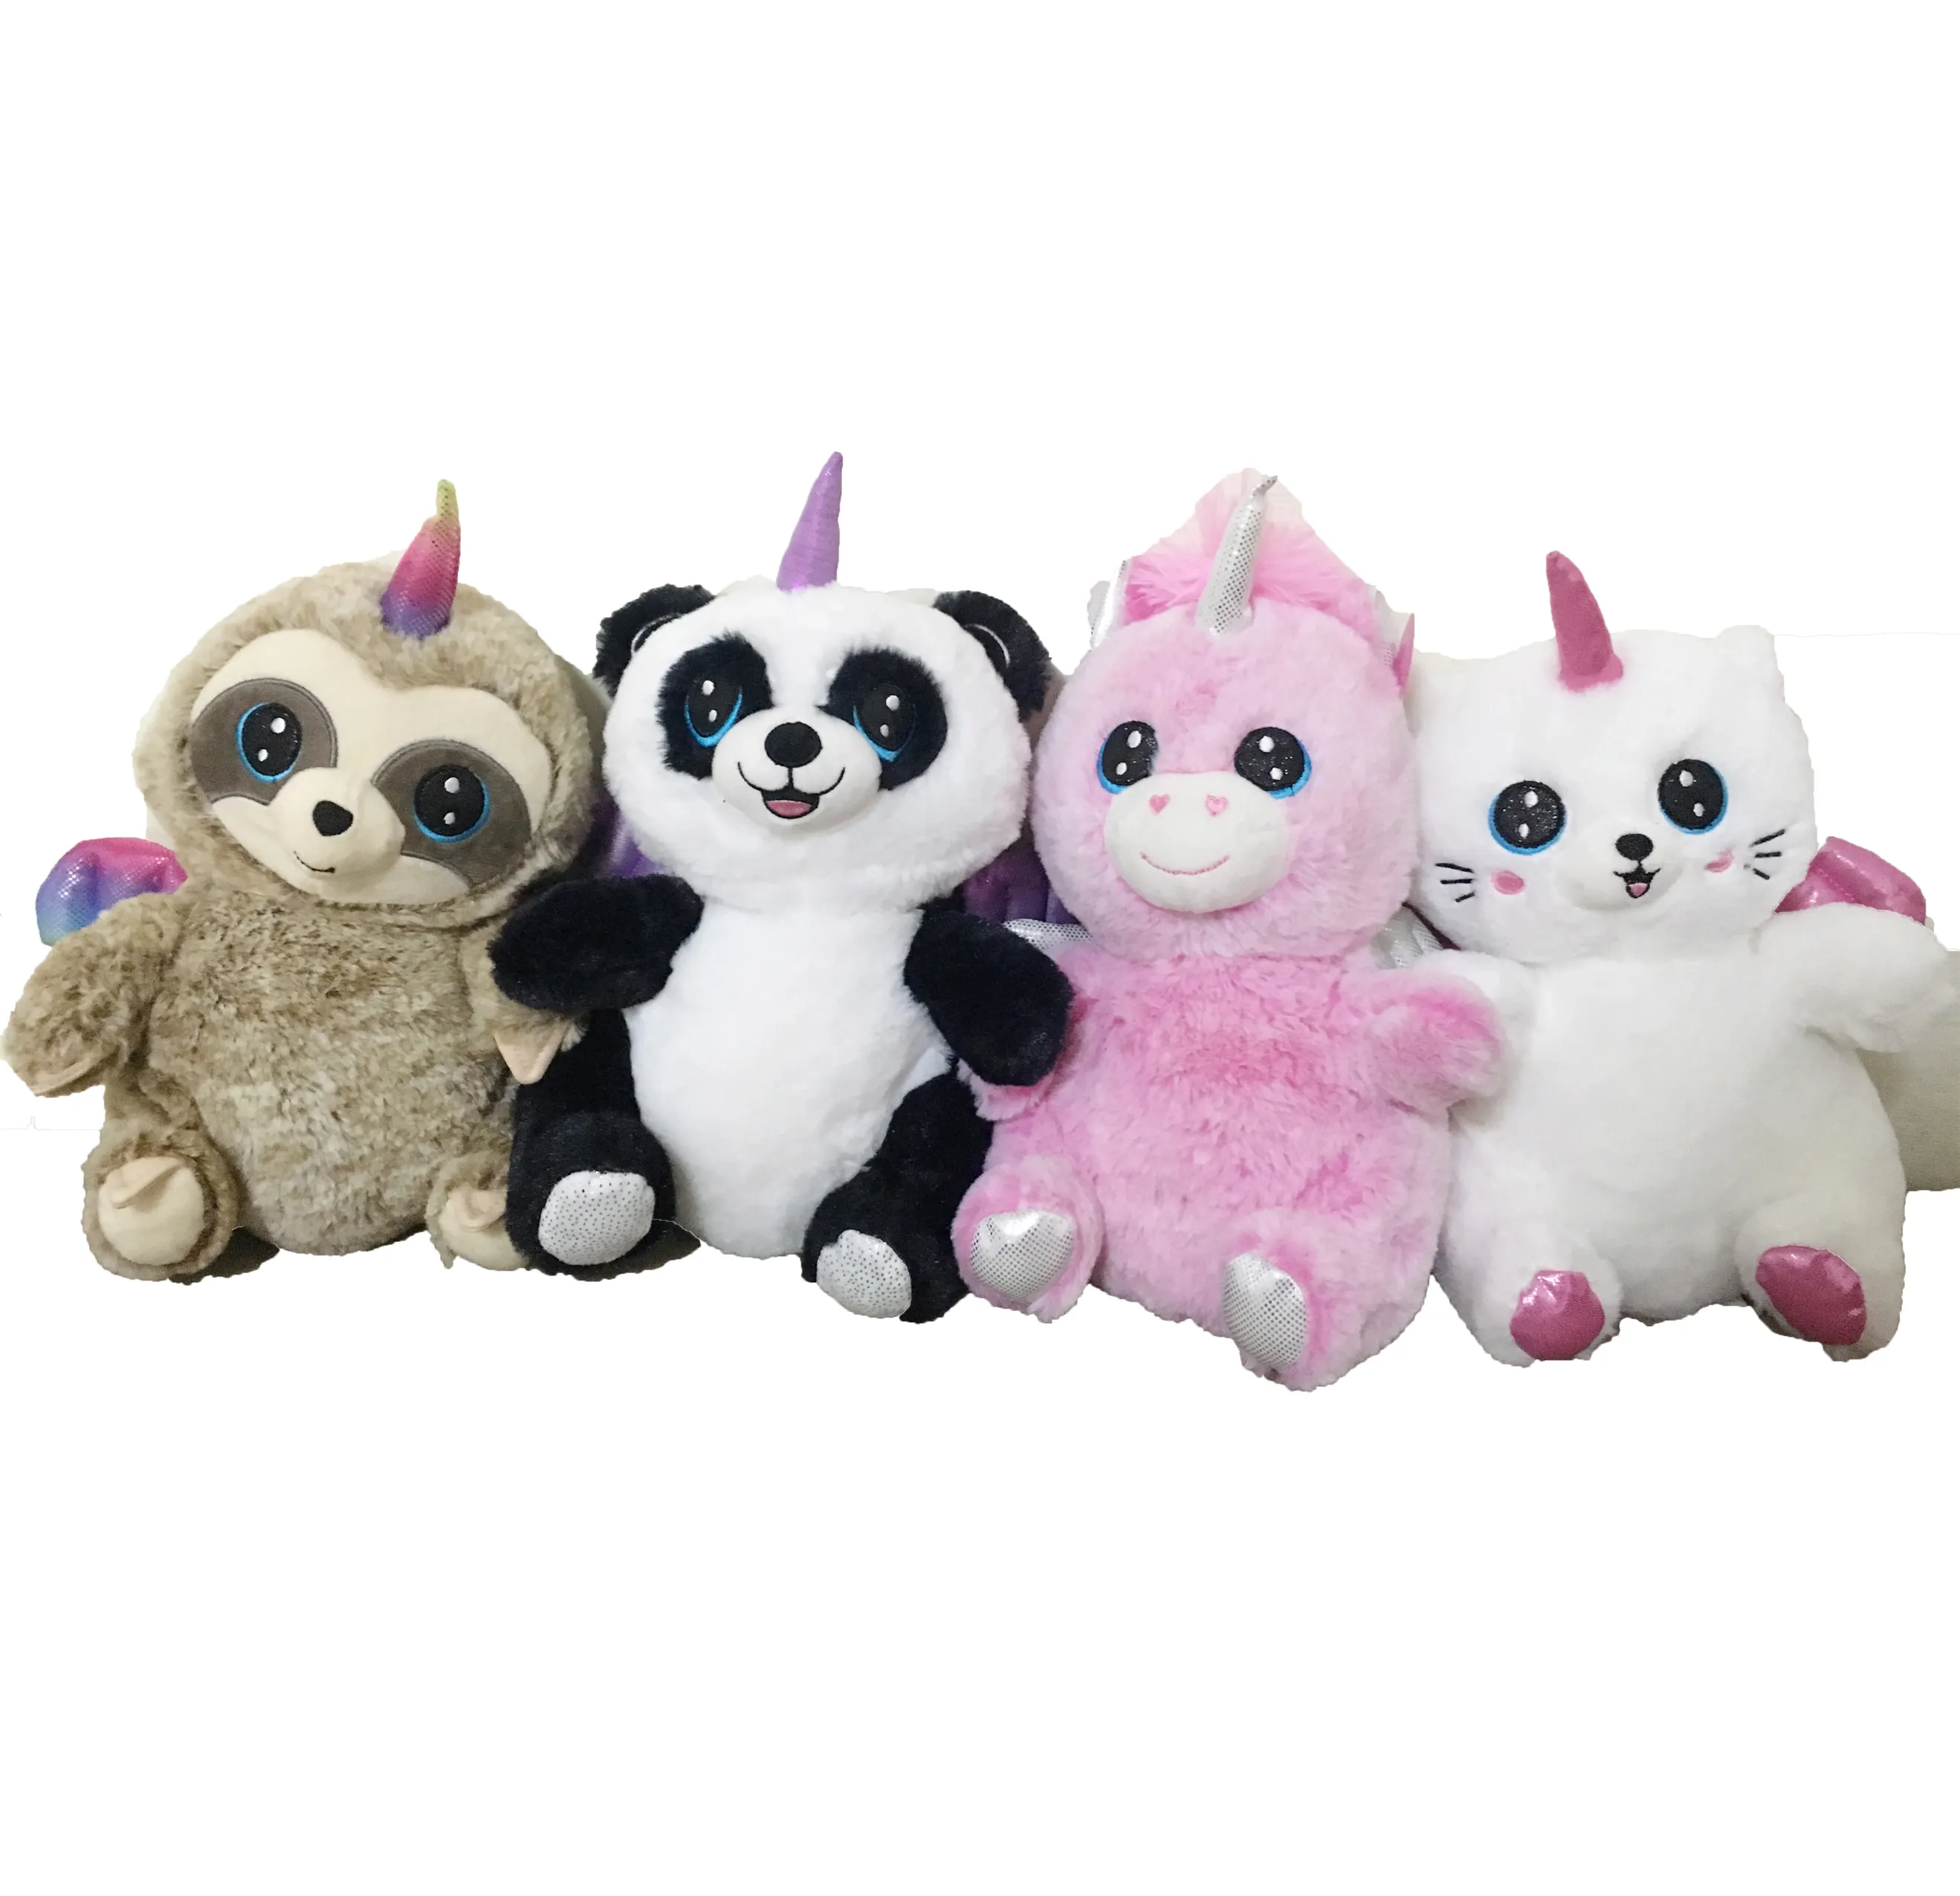 Crane Machine Toys Animals Plush Toy Surplus branded Stock plush toy Winged Pals Panda Unicorn Purple Sparkly Wings Horn